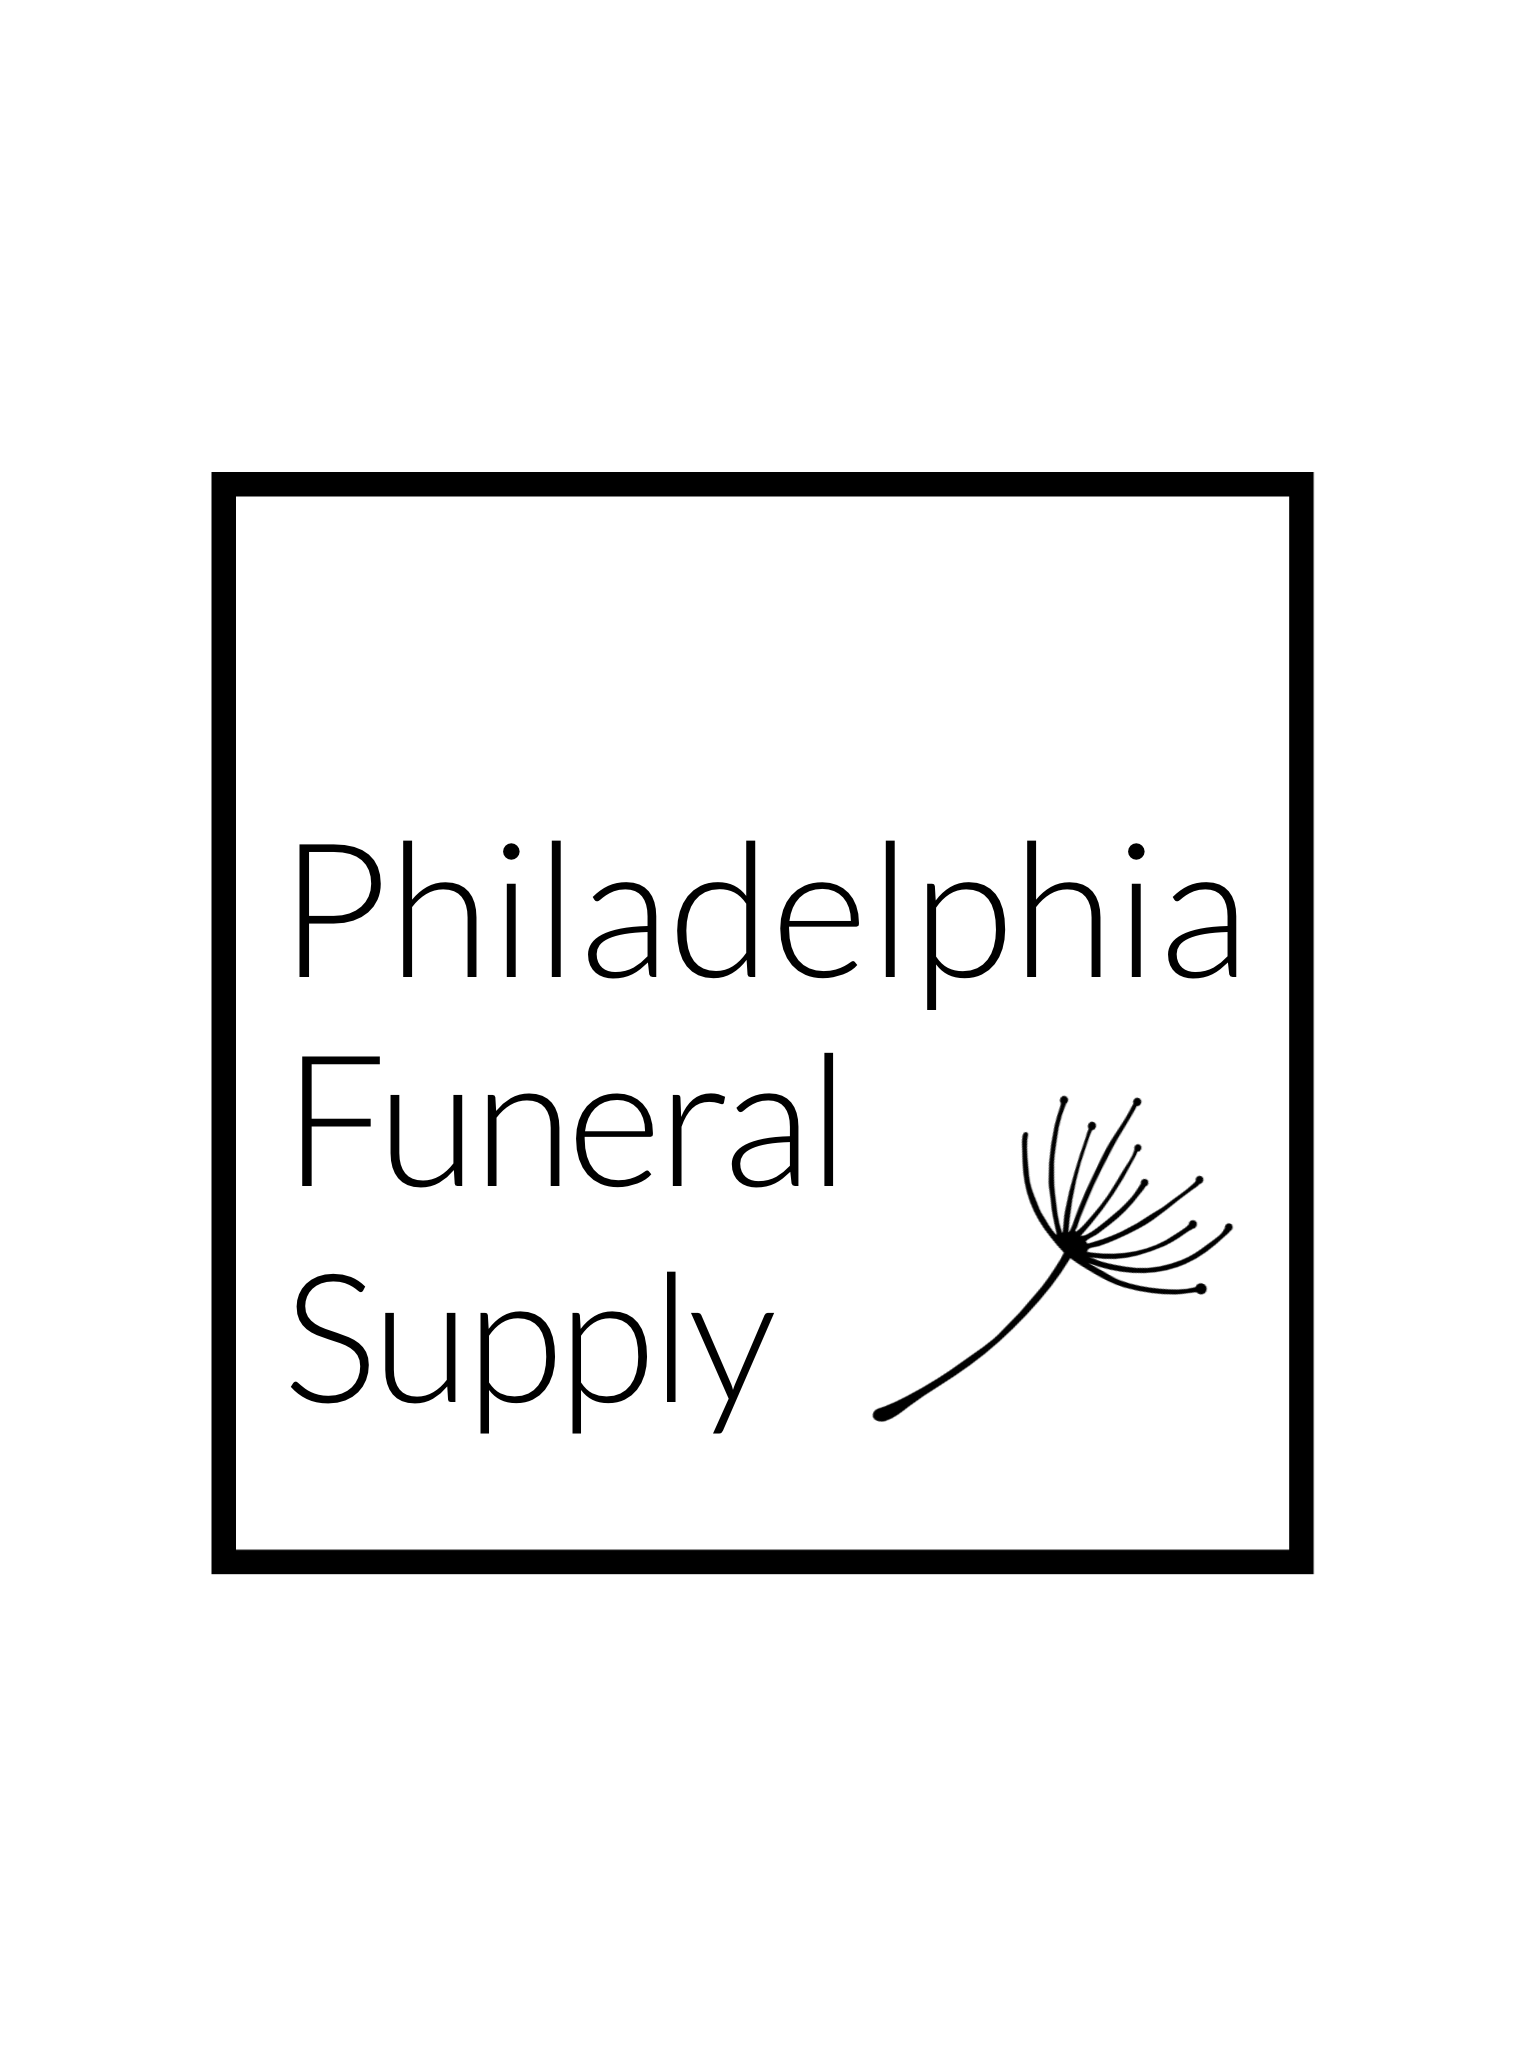 PhiladelphiaFuneralSupply